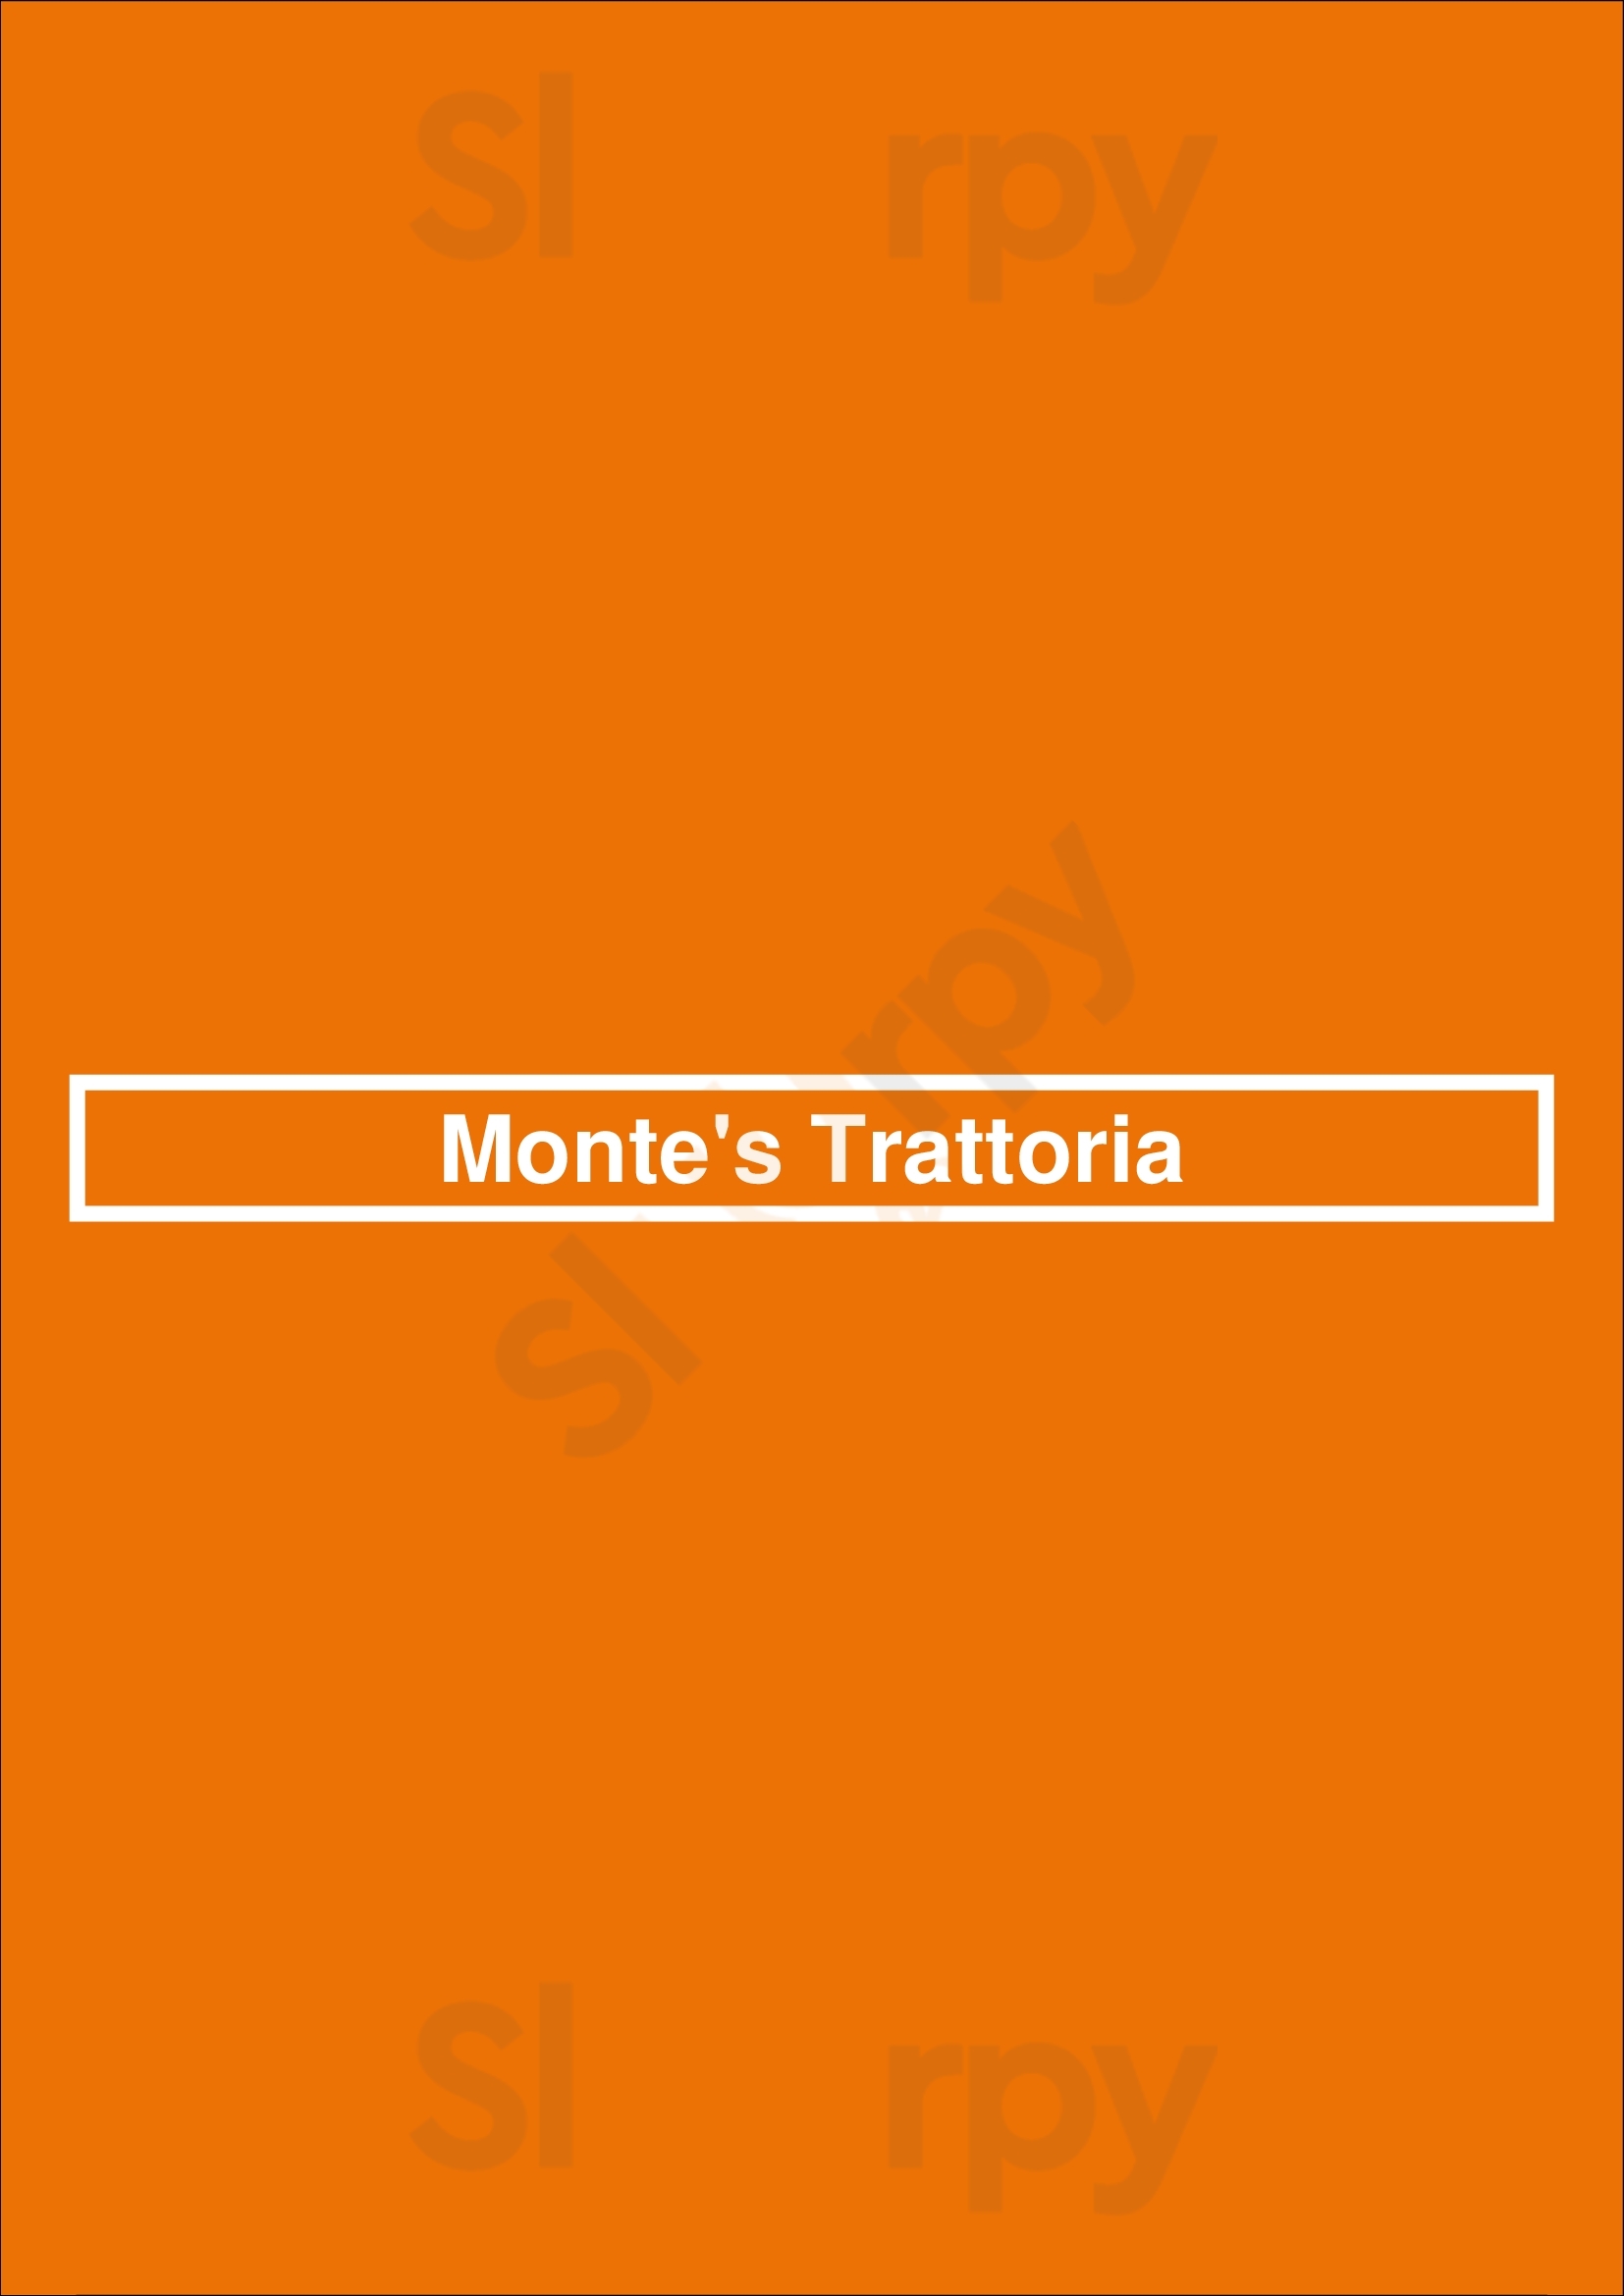 Monte's Trattoria New York City Menu - 1